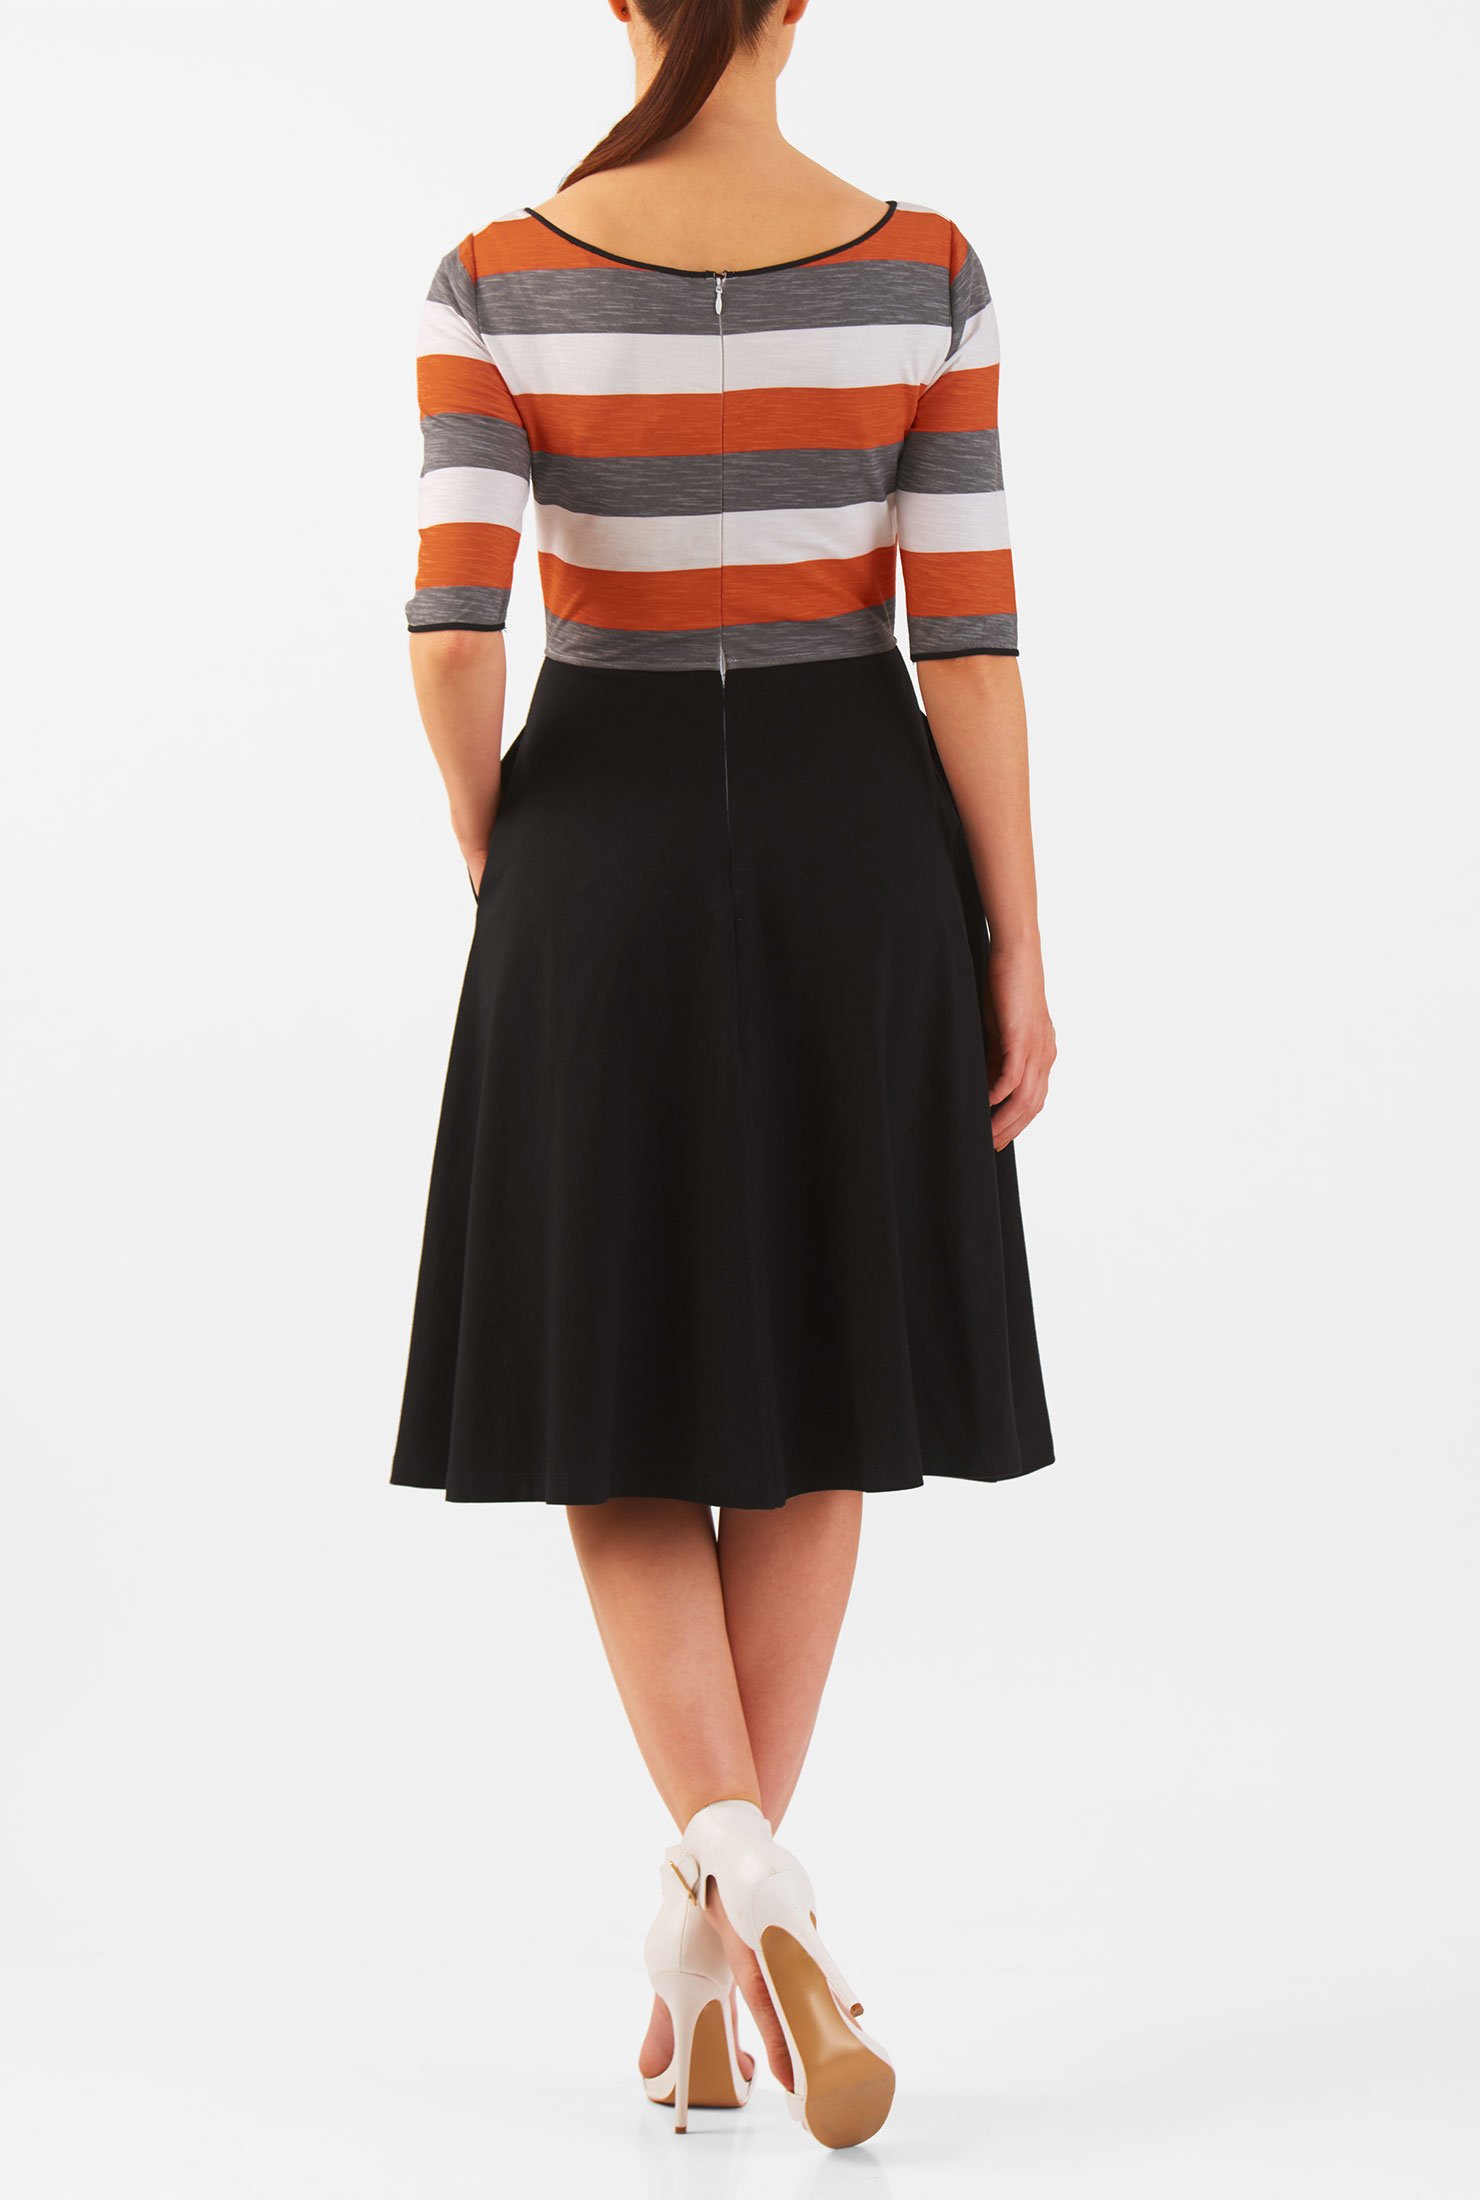 Shop Stripe cotton knit fit-and-flare dress | eShakti